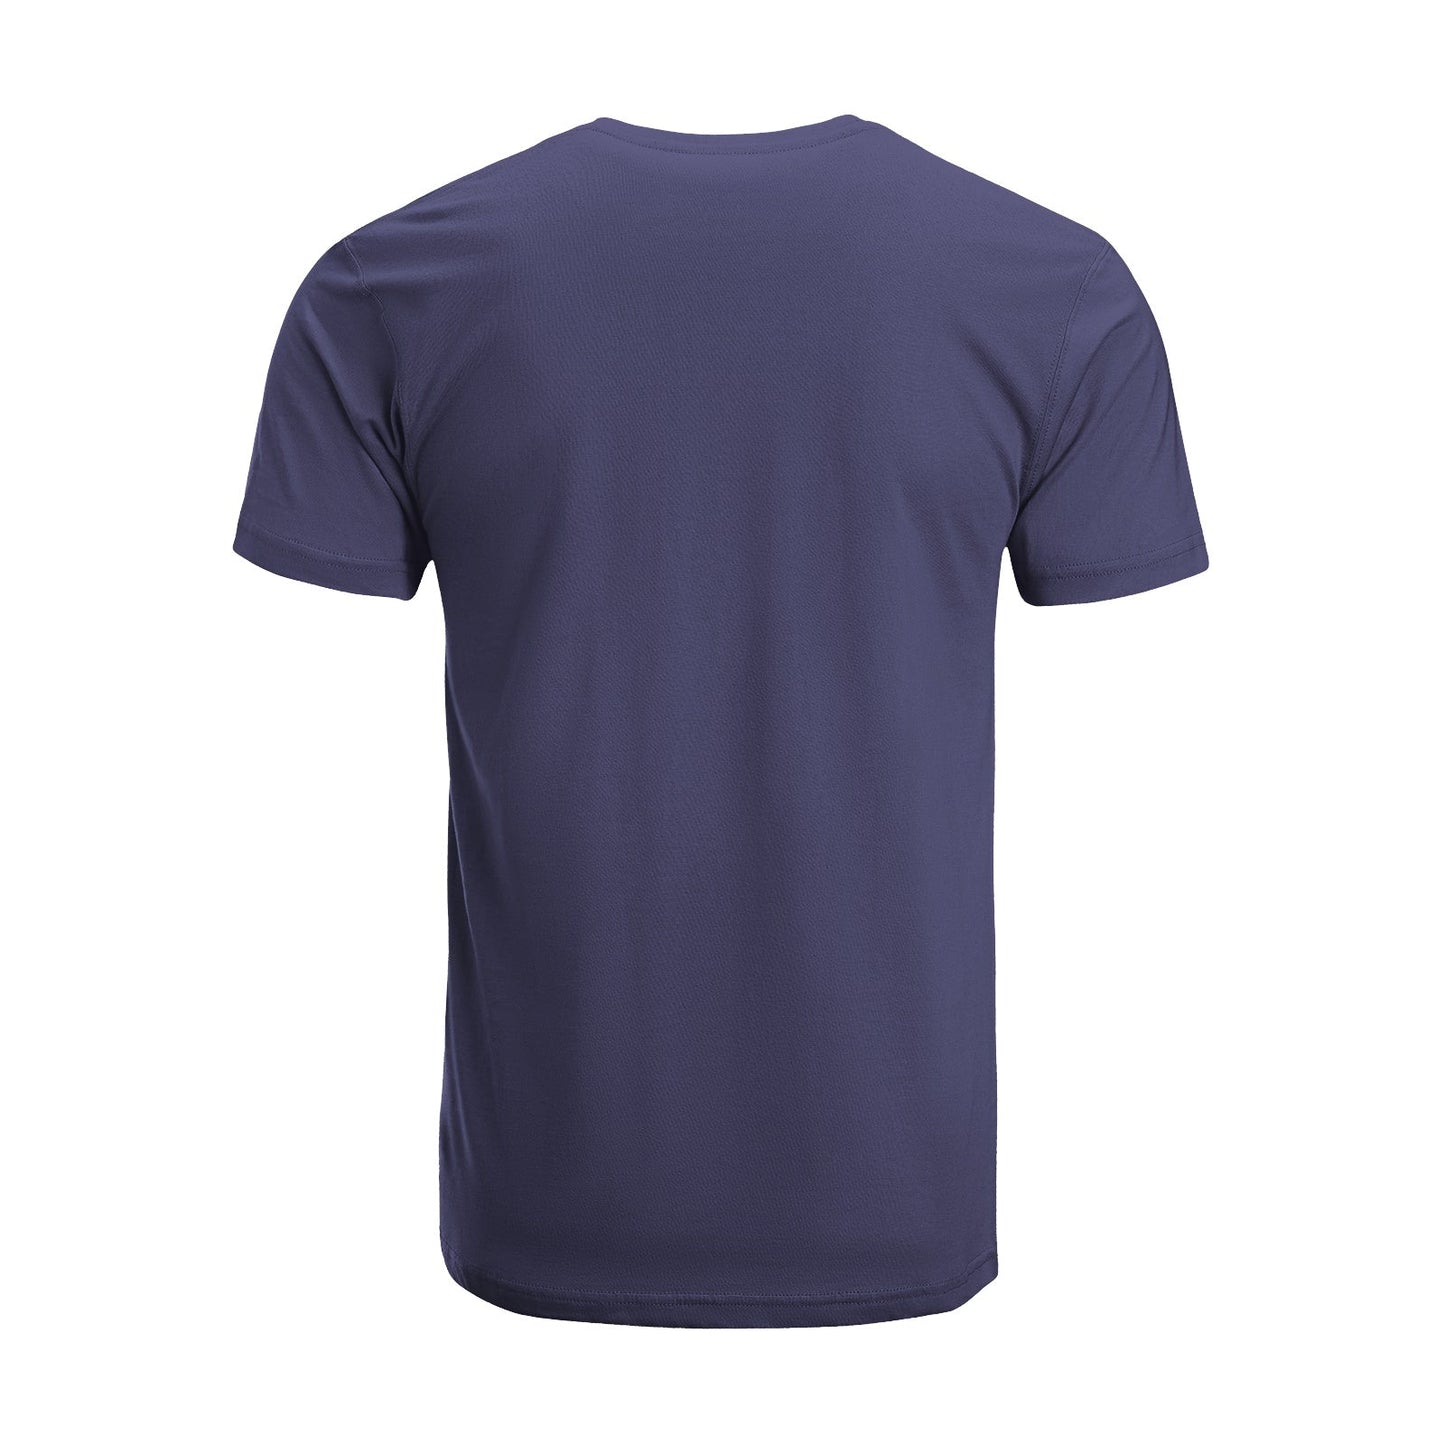 Unisex Short Sleeve Crew Neck Cotton Jersey T-Shirt VEGAN 21